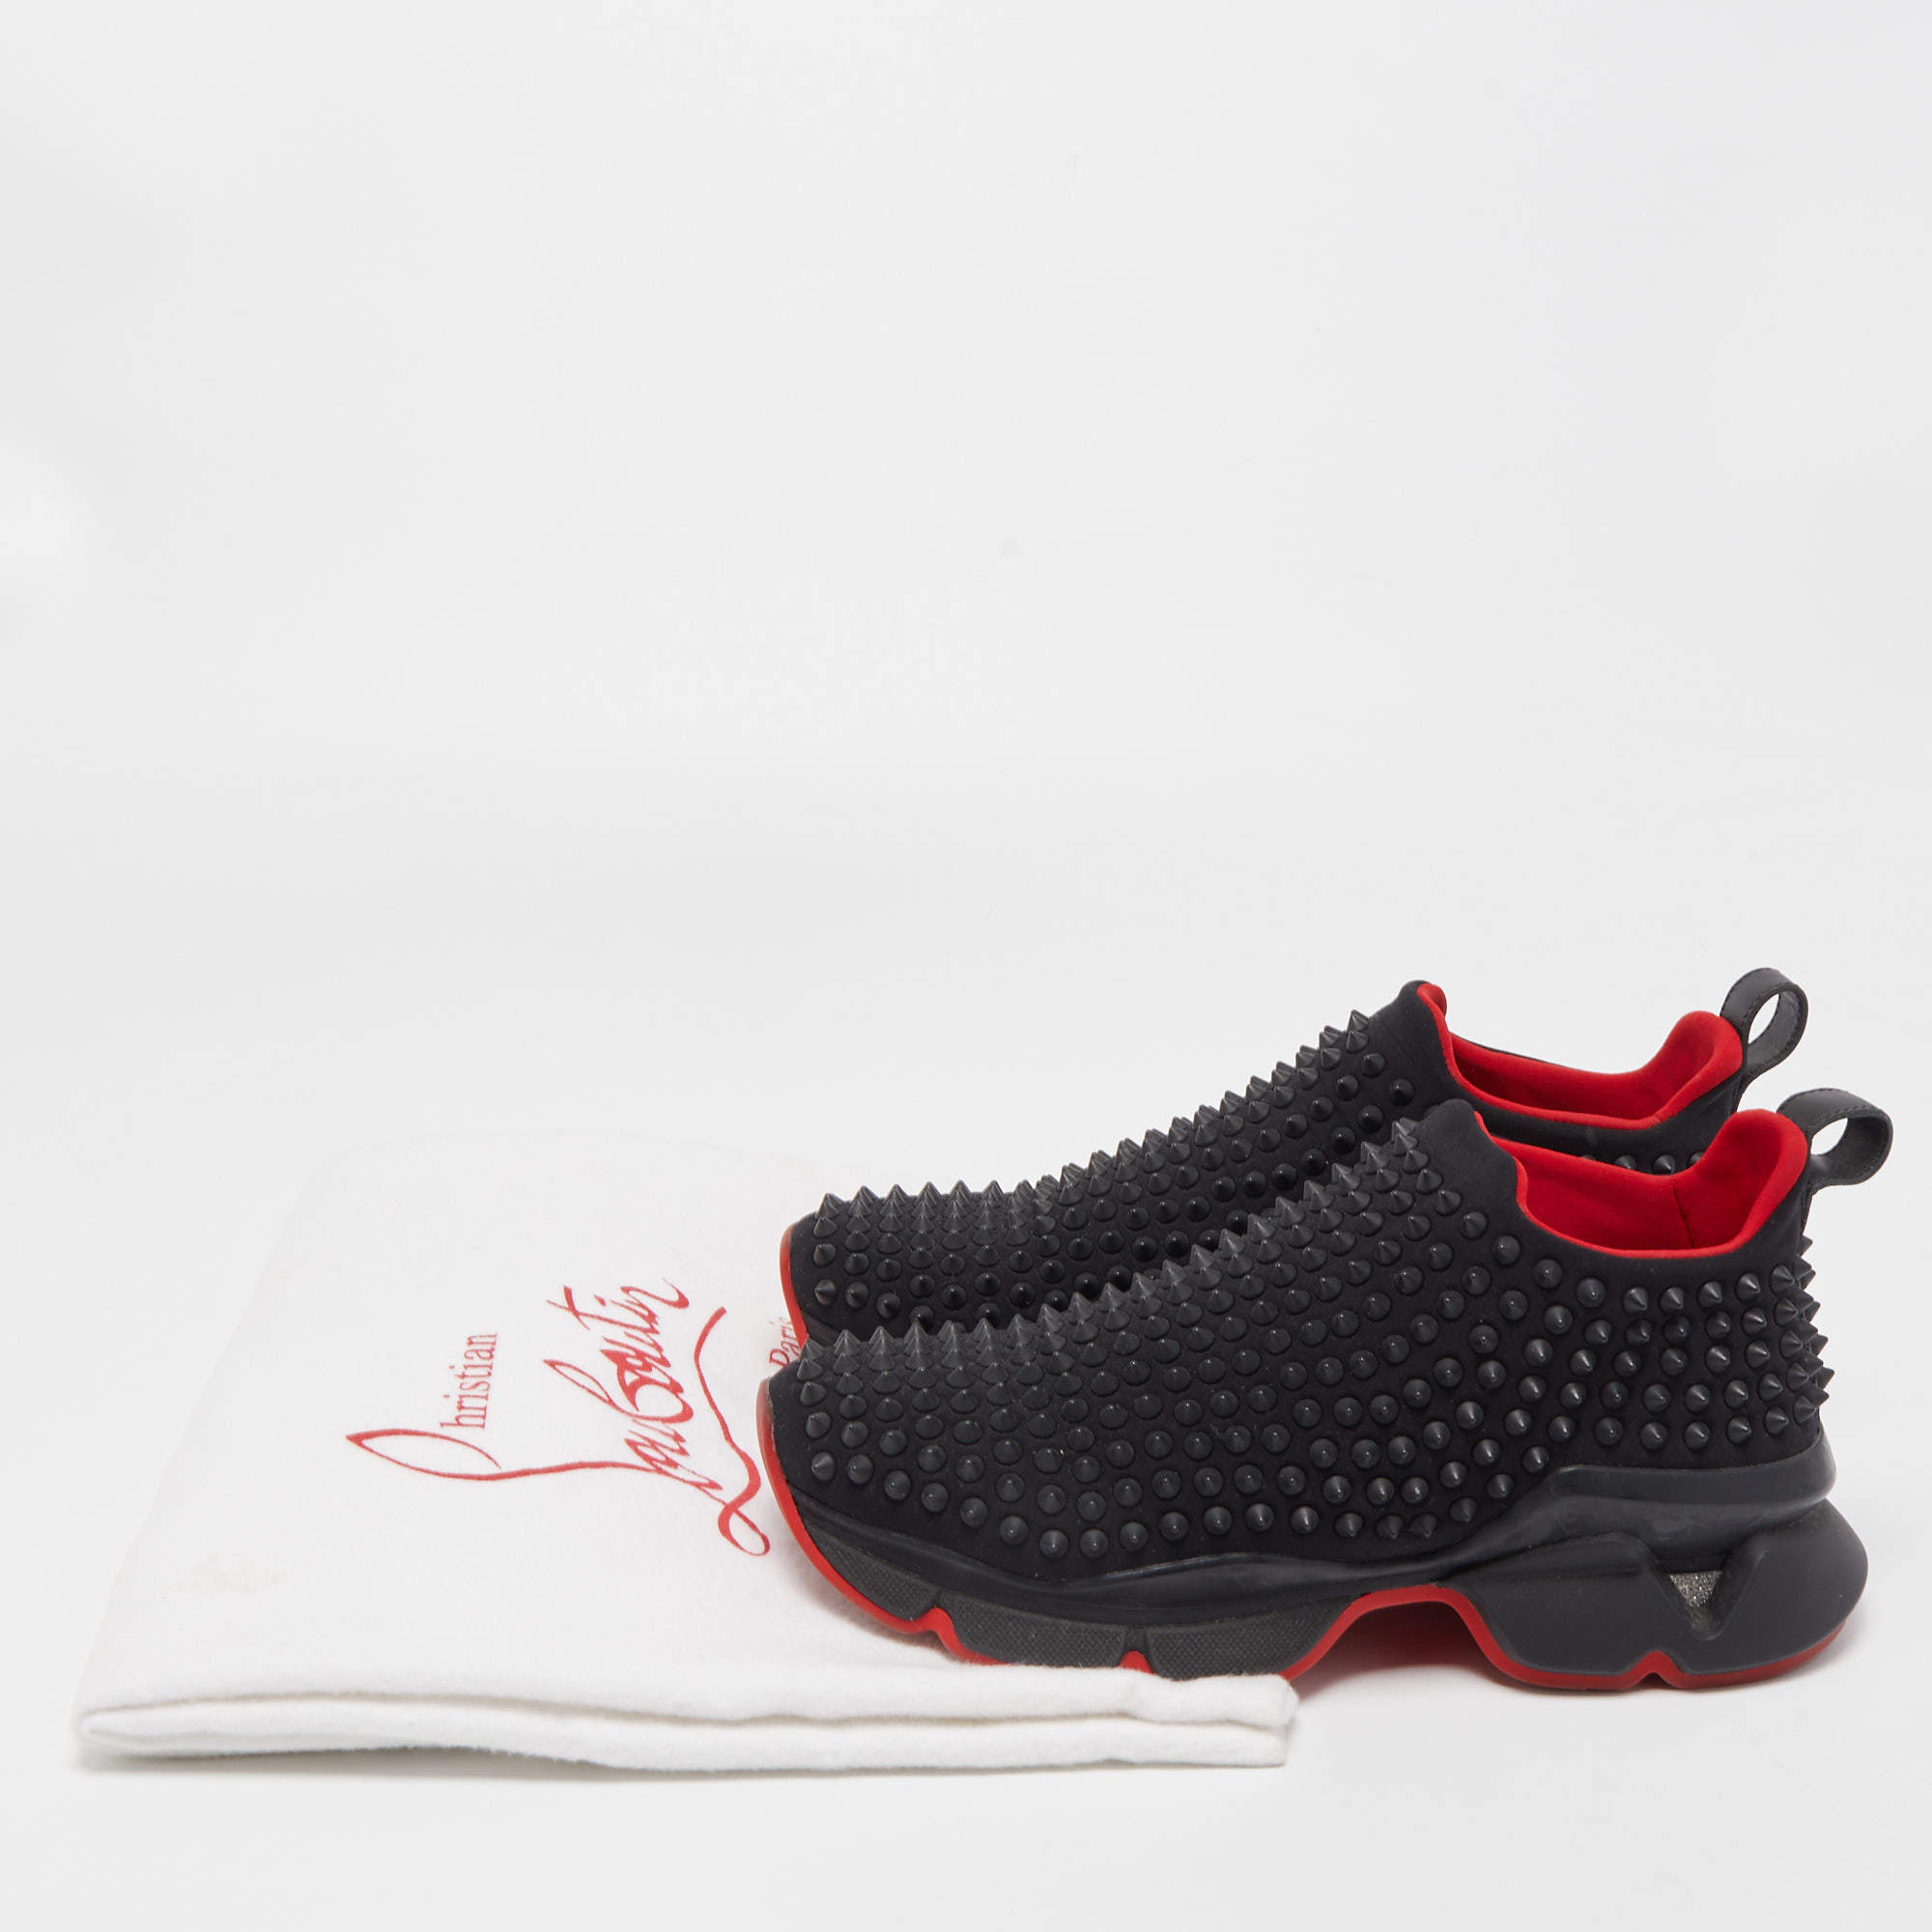 Christian Louboutin Spike Sock Sneakers Size 41/US 11 in Black